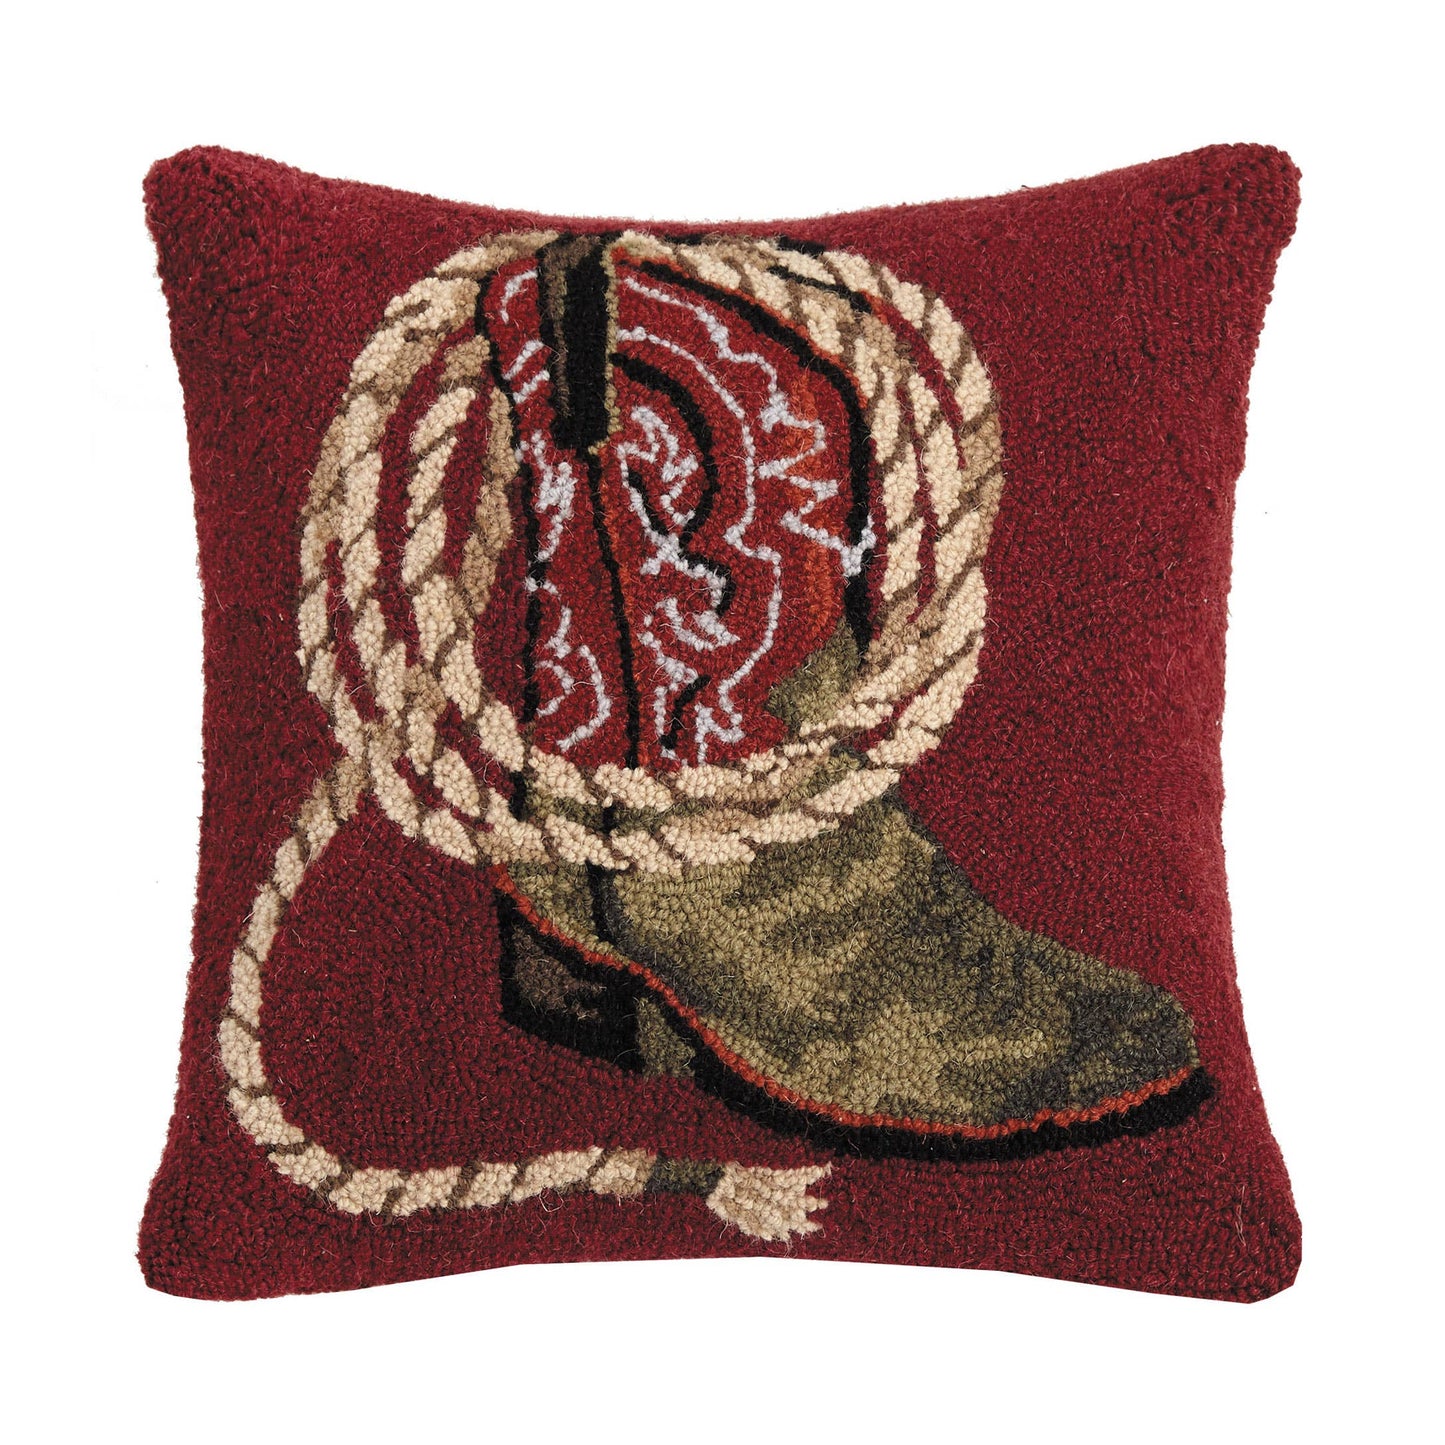 Kid Rock Cowboy Boot Cushion